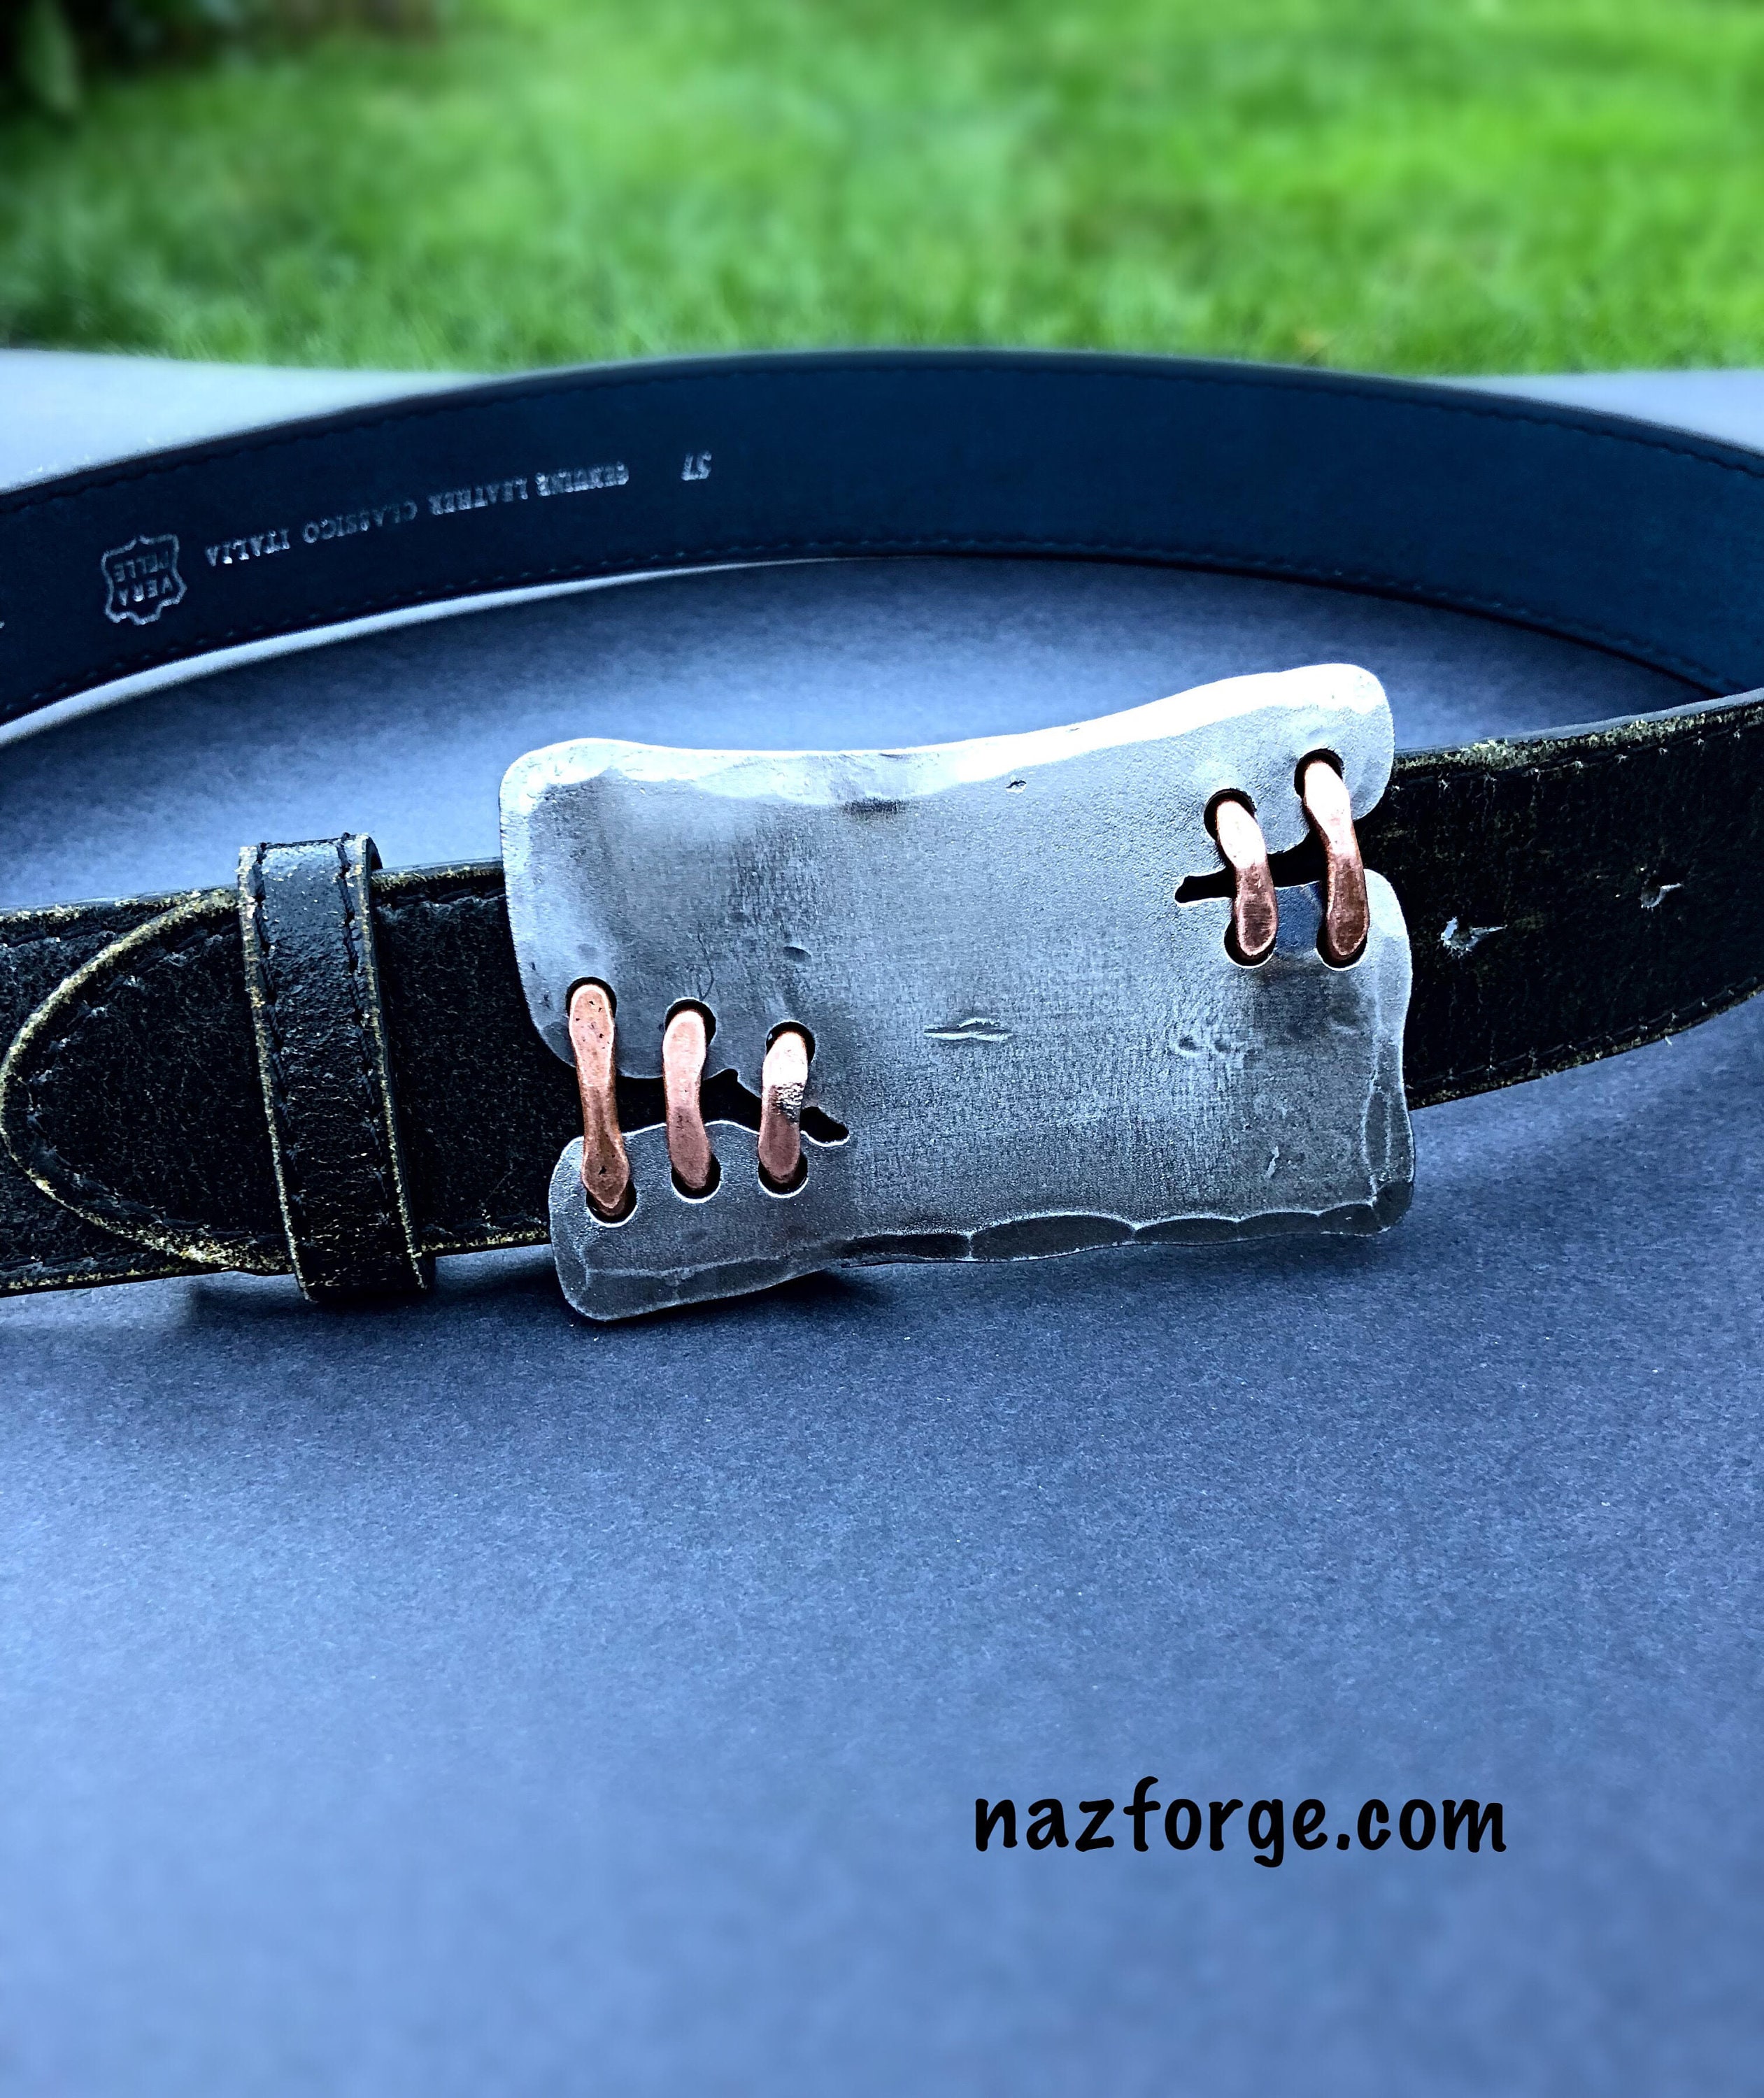 Rebar belt buckle. Thoughts? : r/Blacksmith